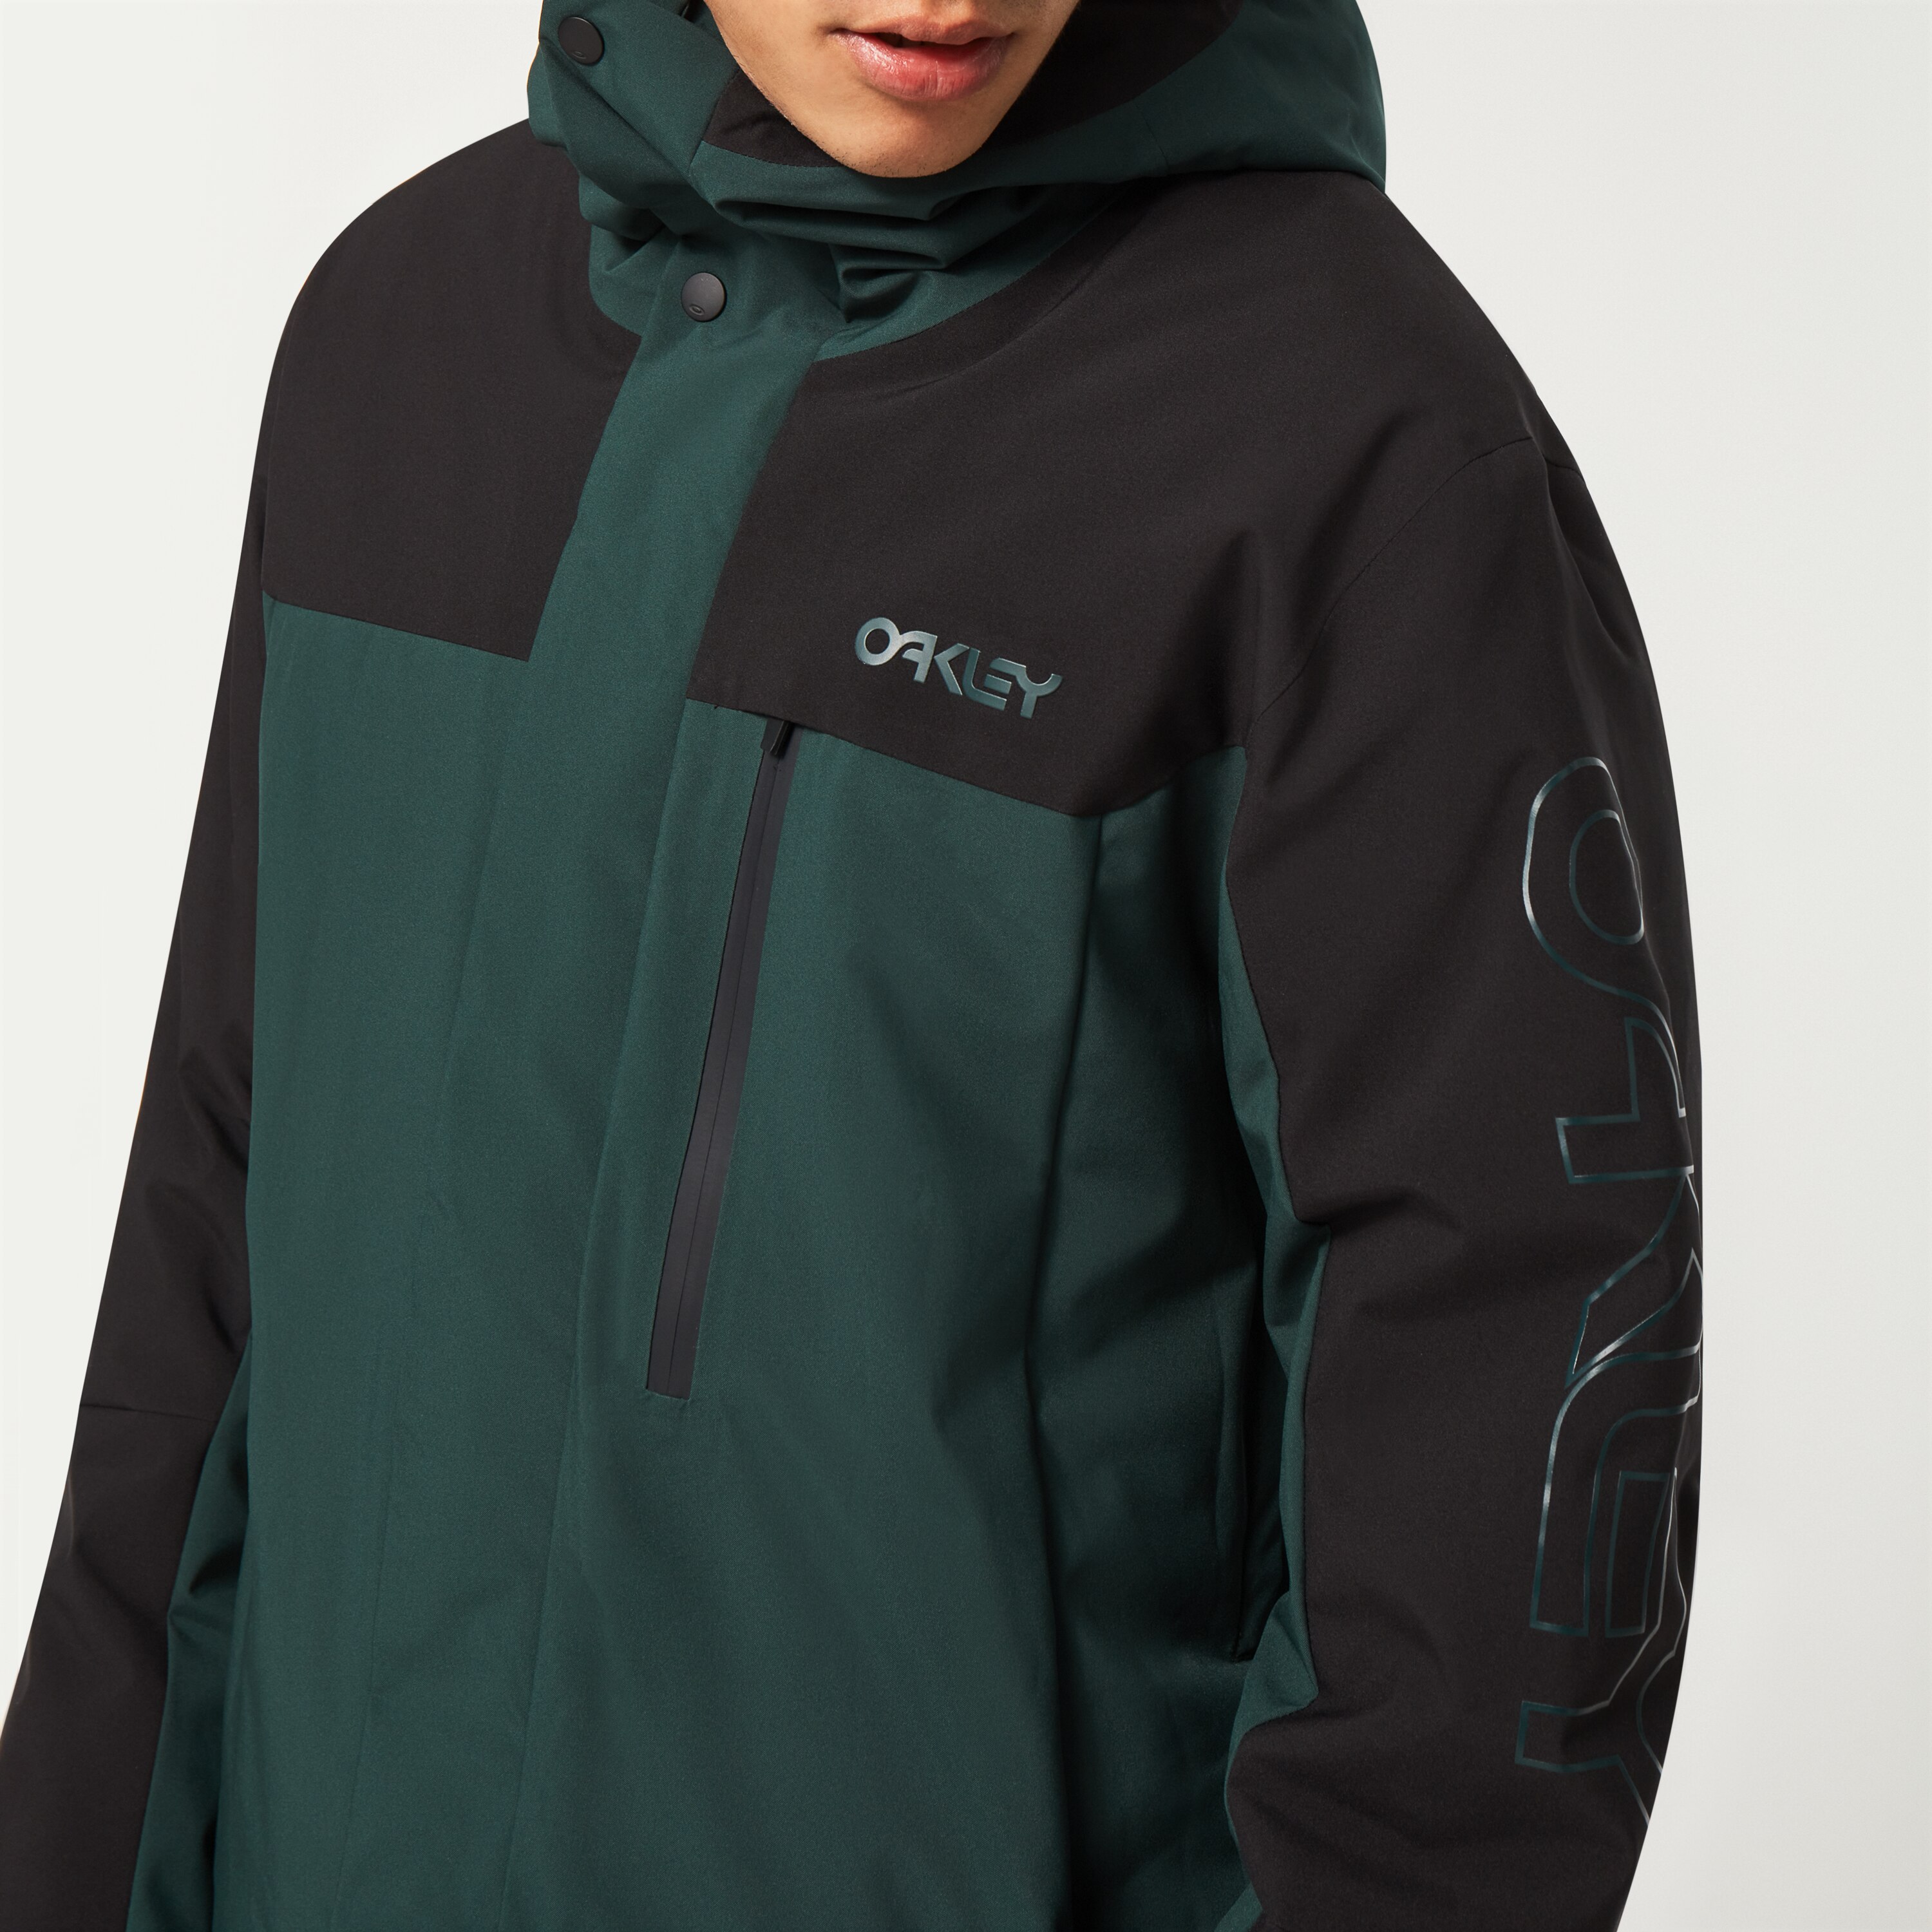 Oakley Tnp Tbt Insulated Jacket - Hunter Green/Blackout | Oakley®